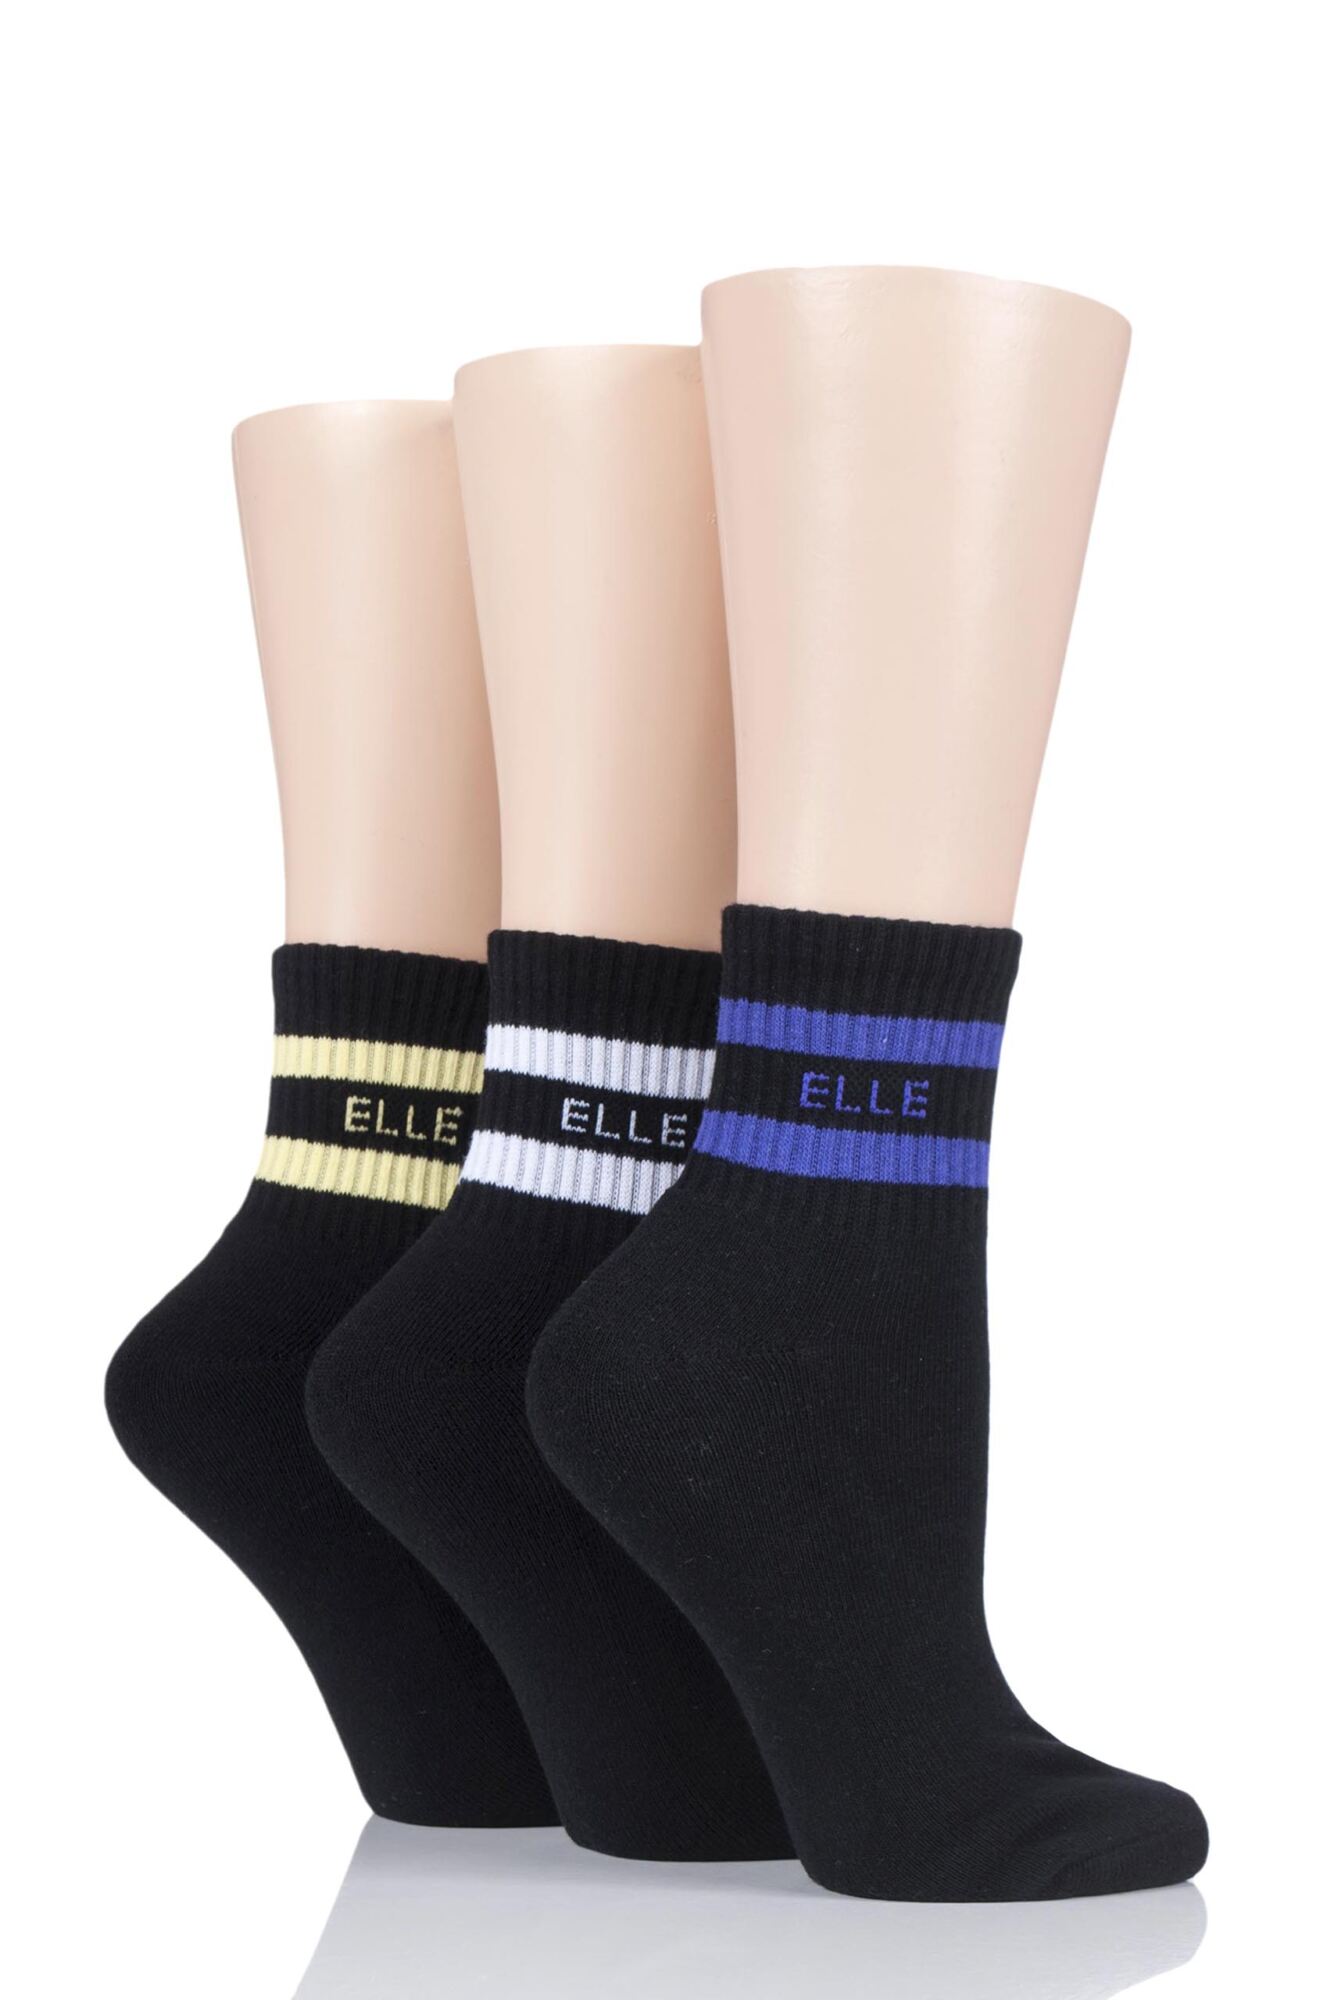 3 Pair Half Cushion Sports Anklet Socks Ladies - Elle